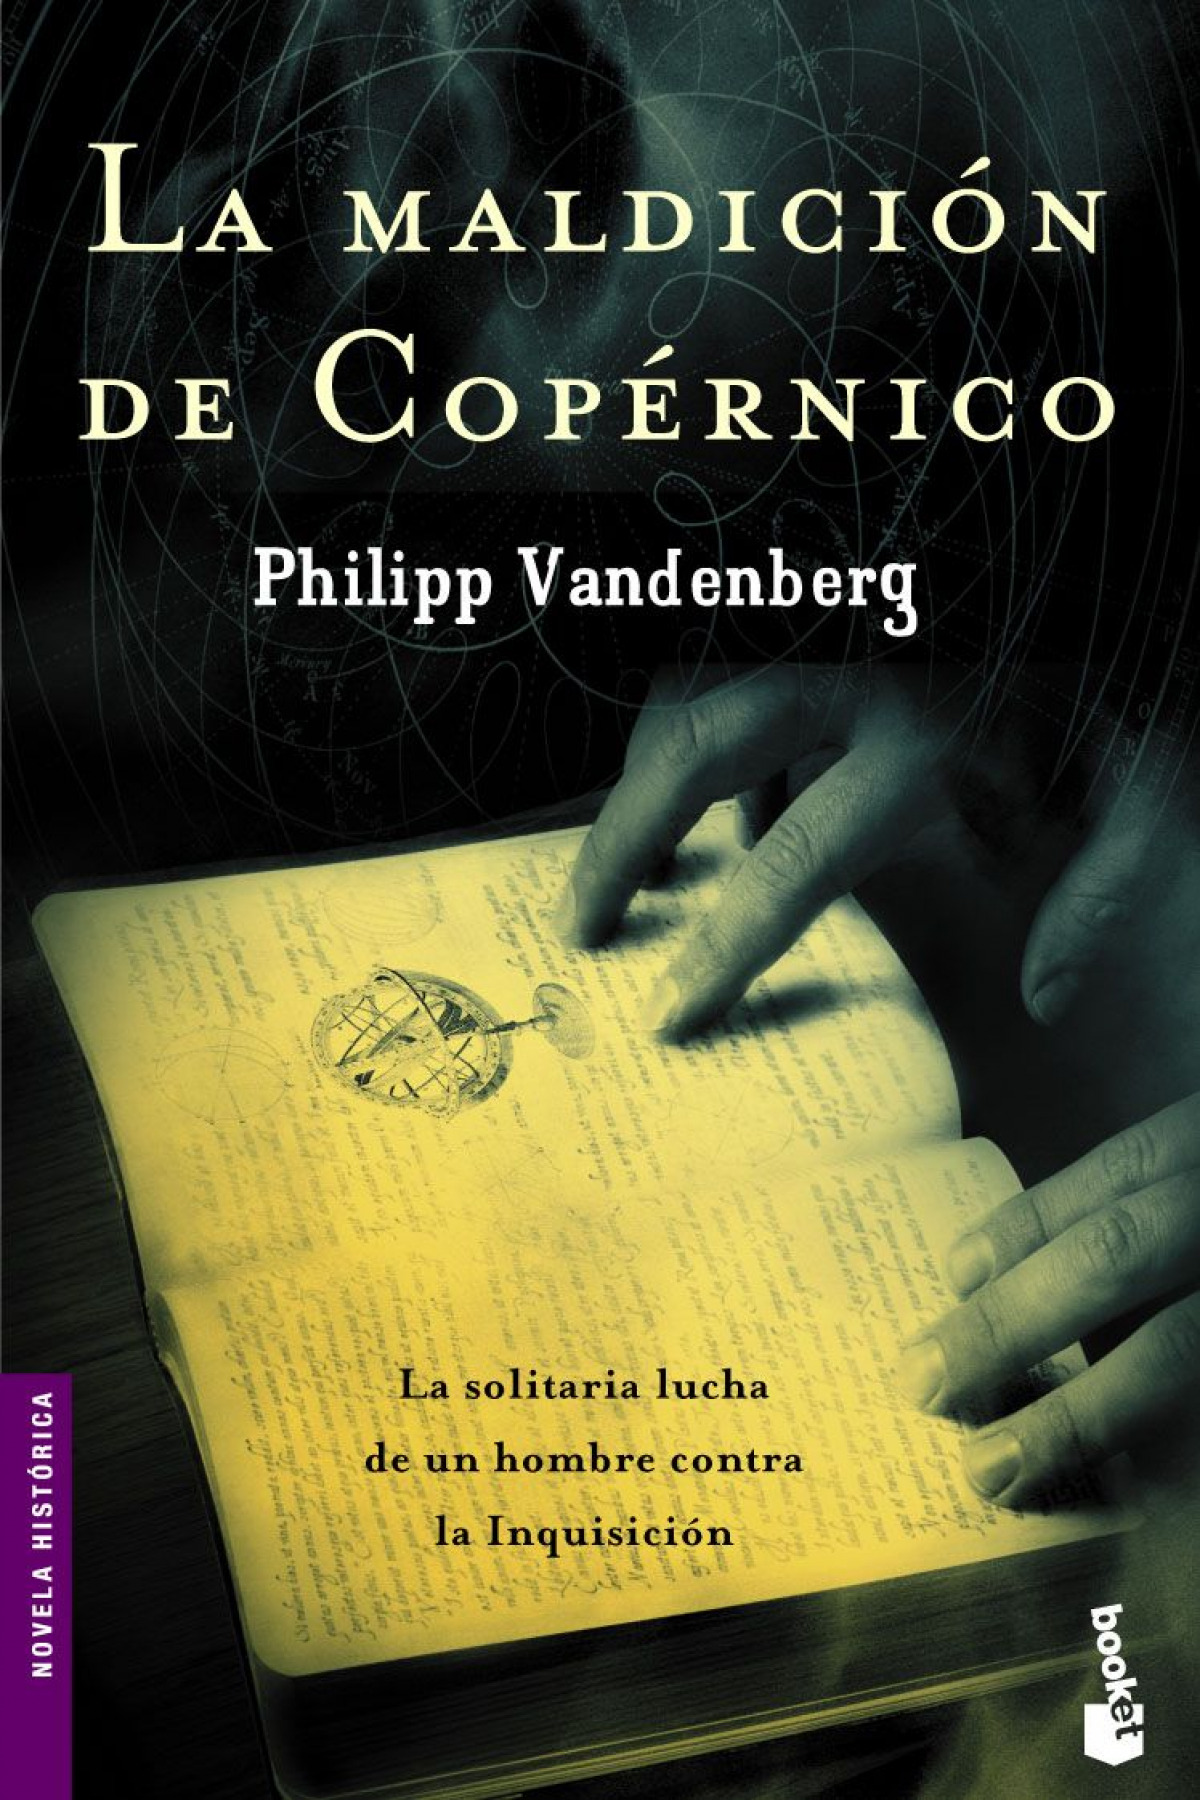 La maldicion de copernico - Philipp Vandenberg